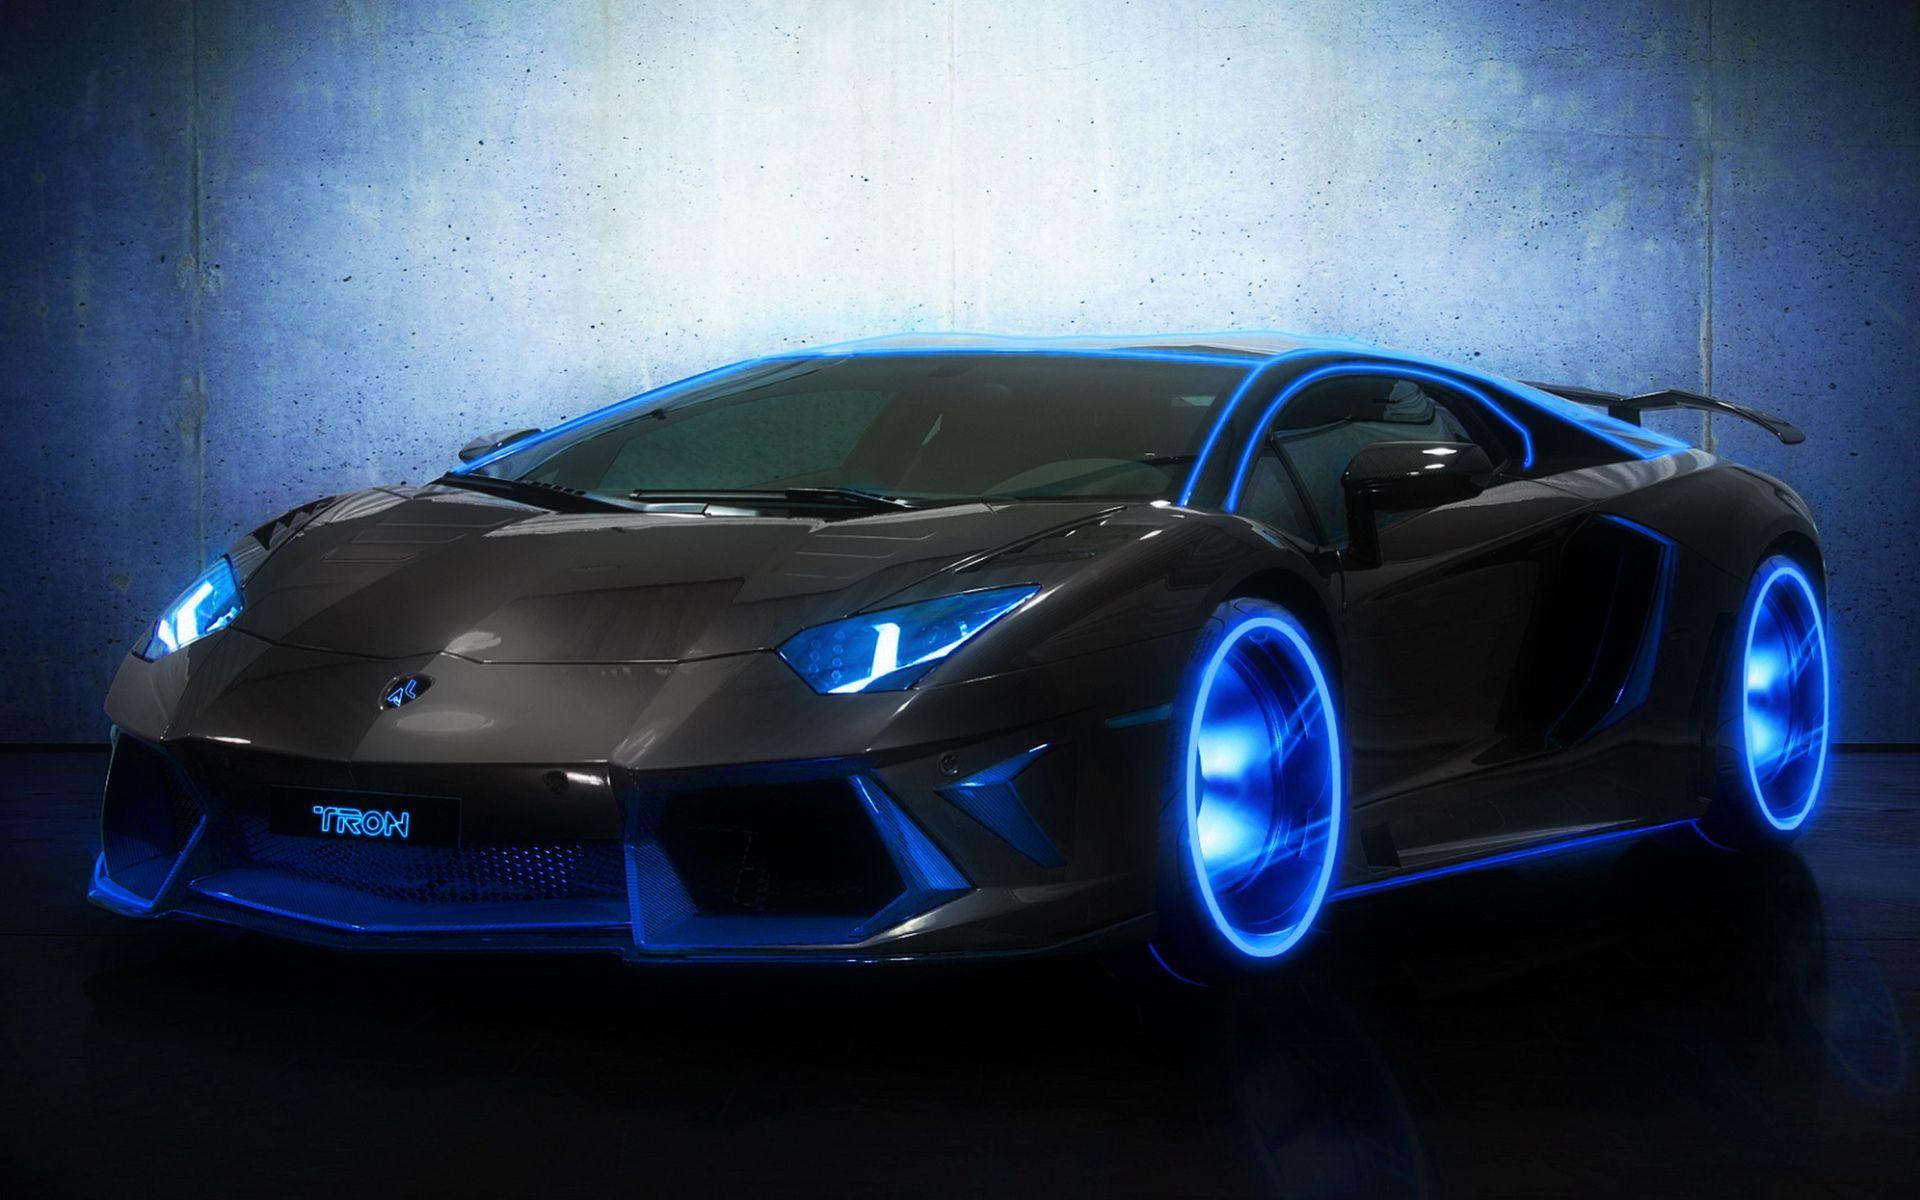 Blue and Black Lamborghini Aventador Sports Car Wallpaper